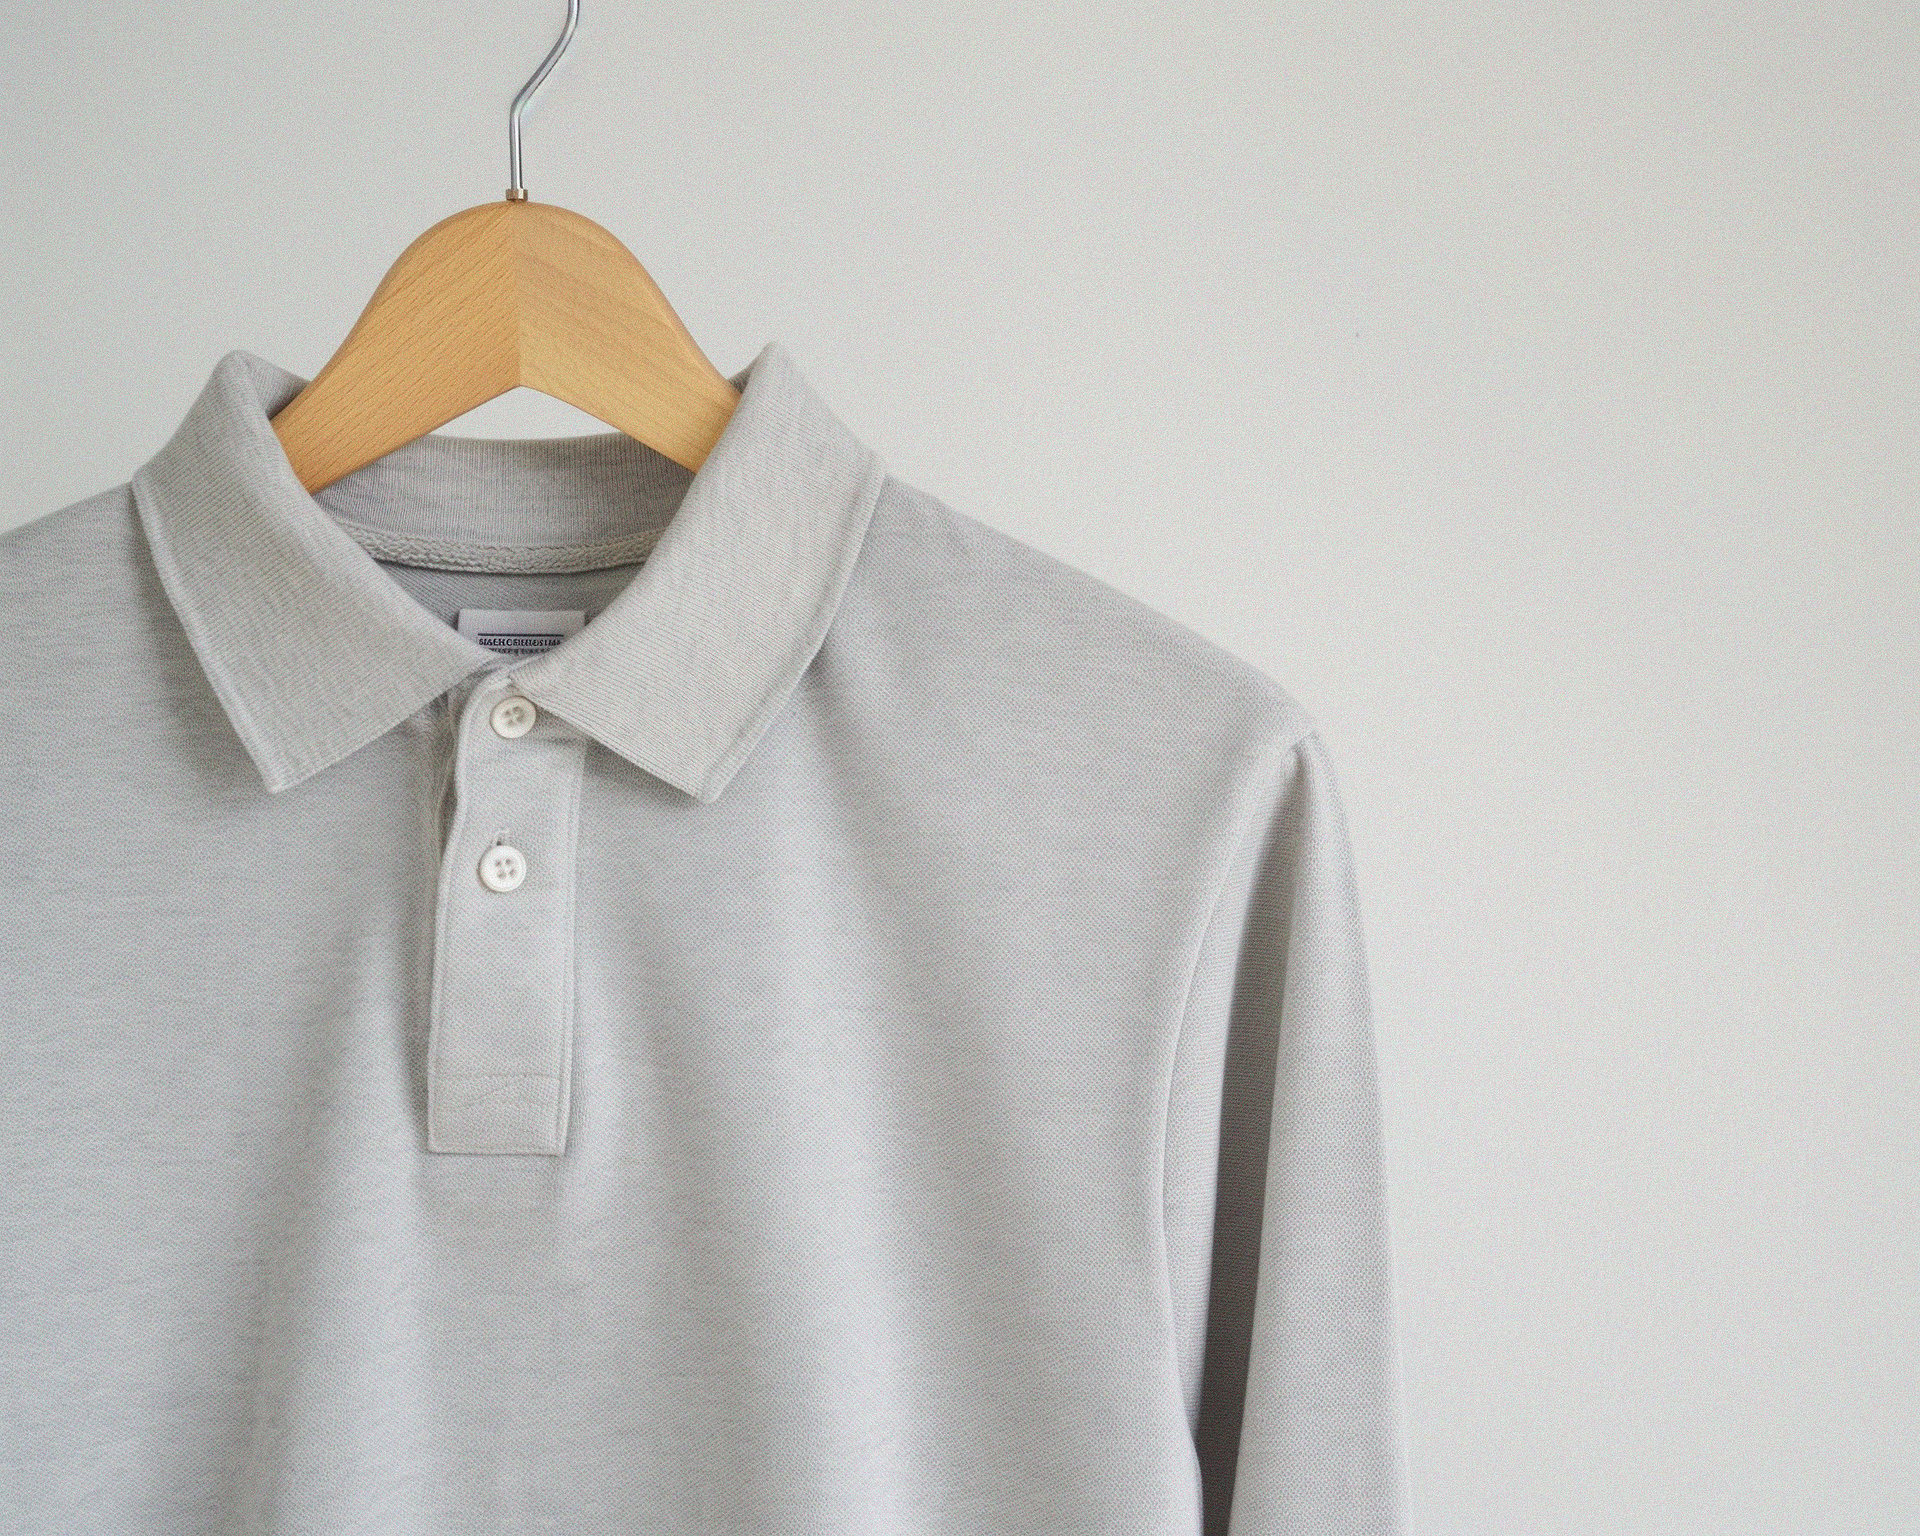 Light gray polo shirt